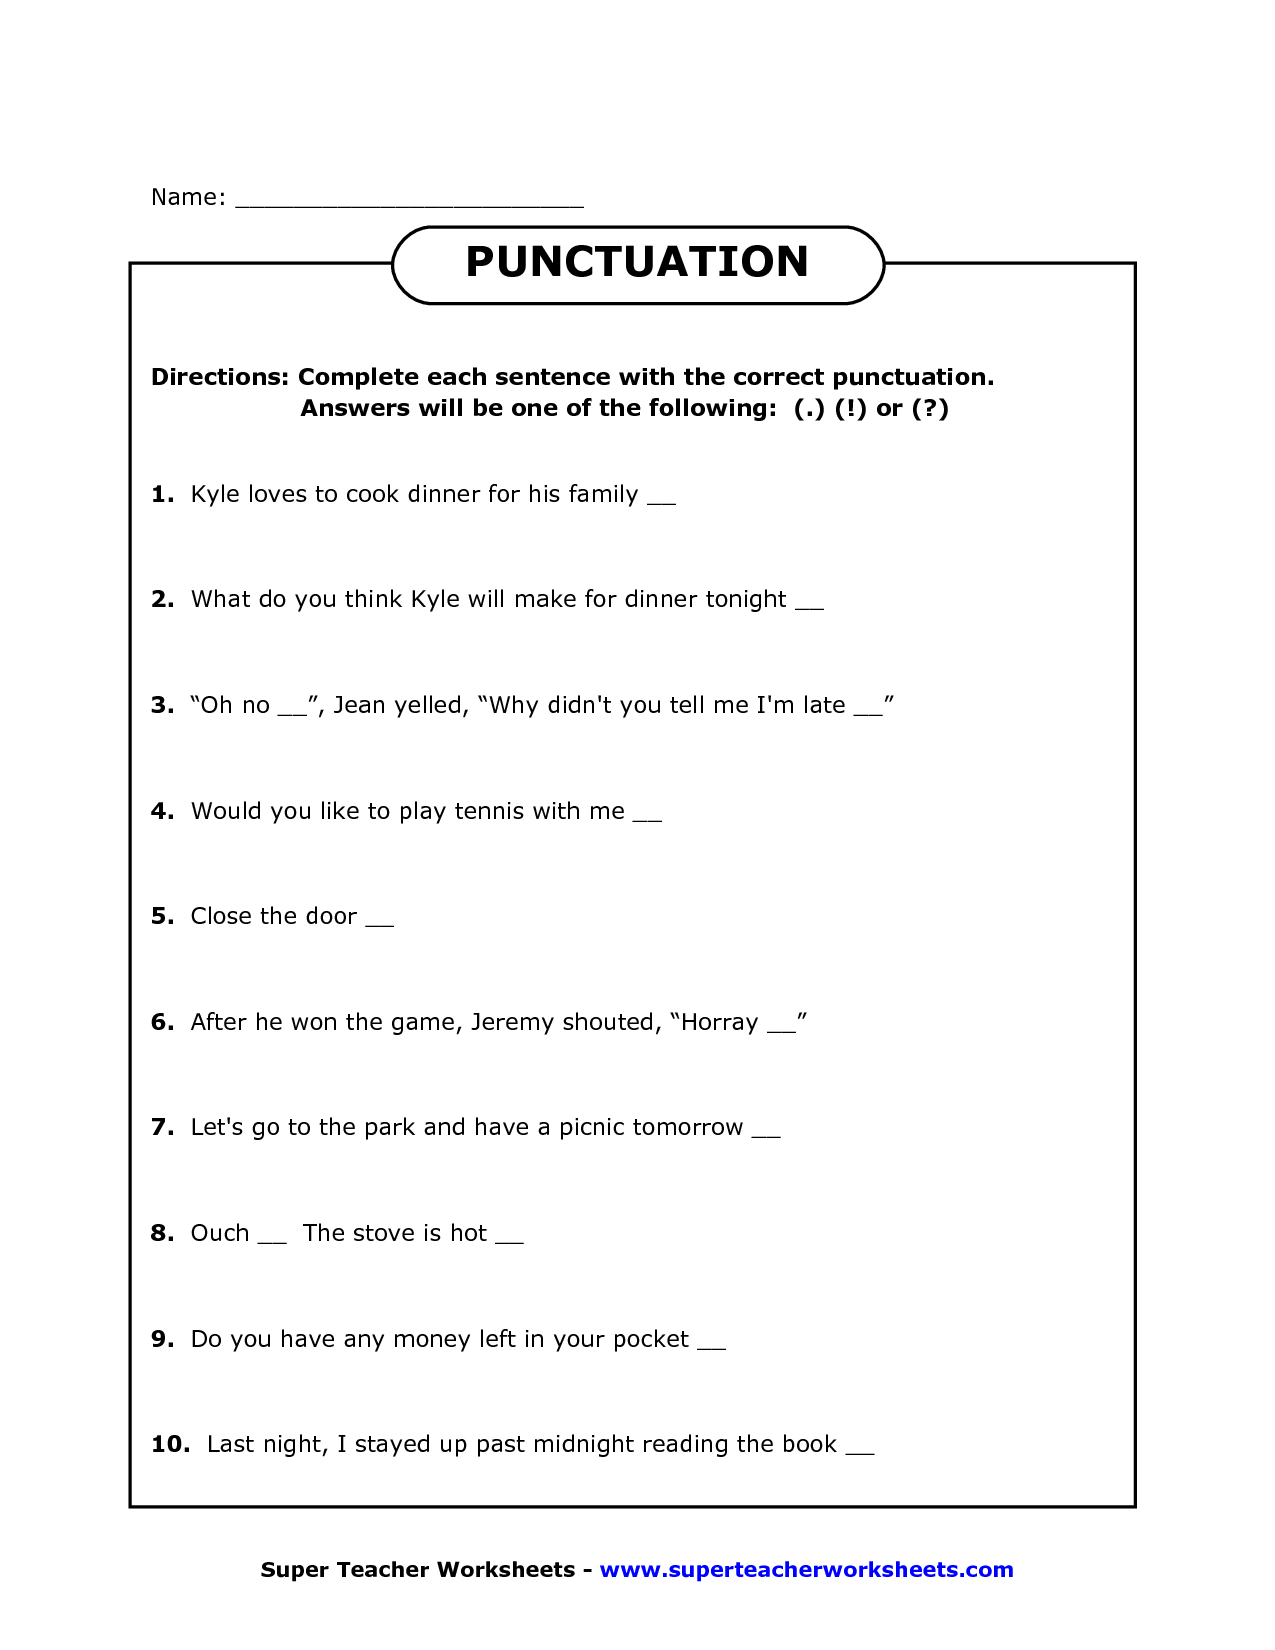 sentence-correction-worksheets-3rd-grade